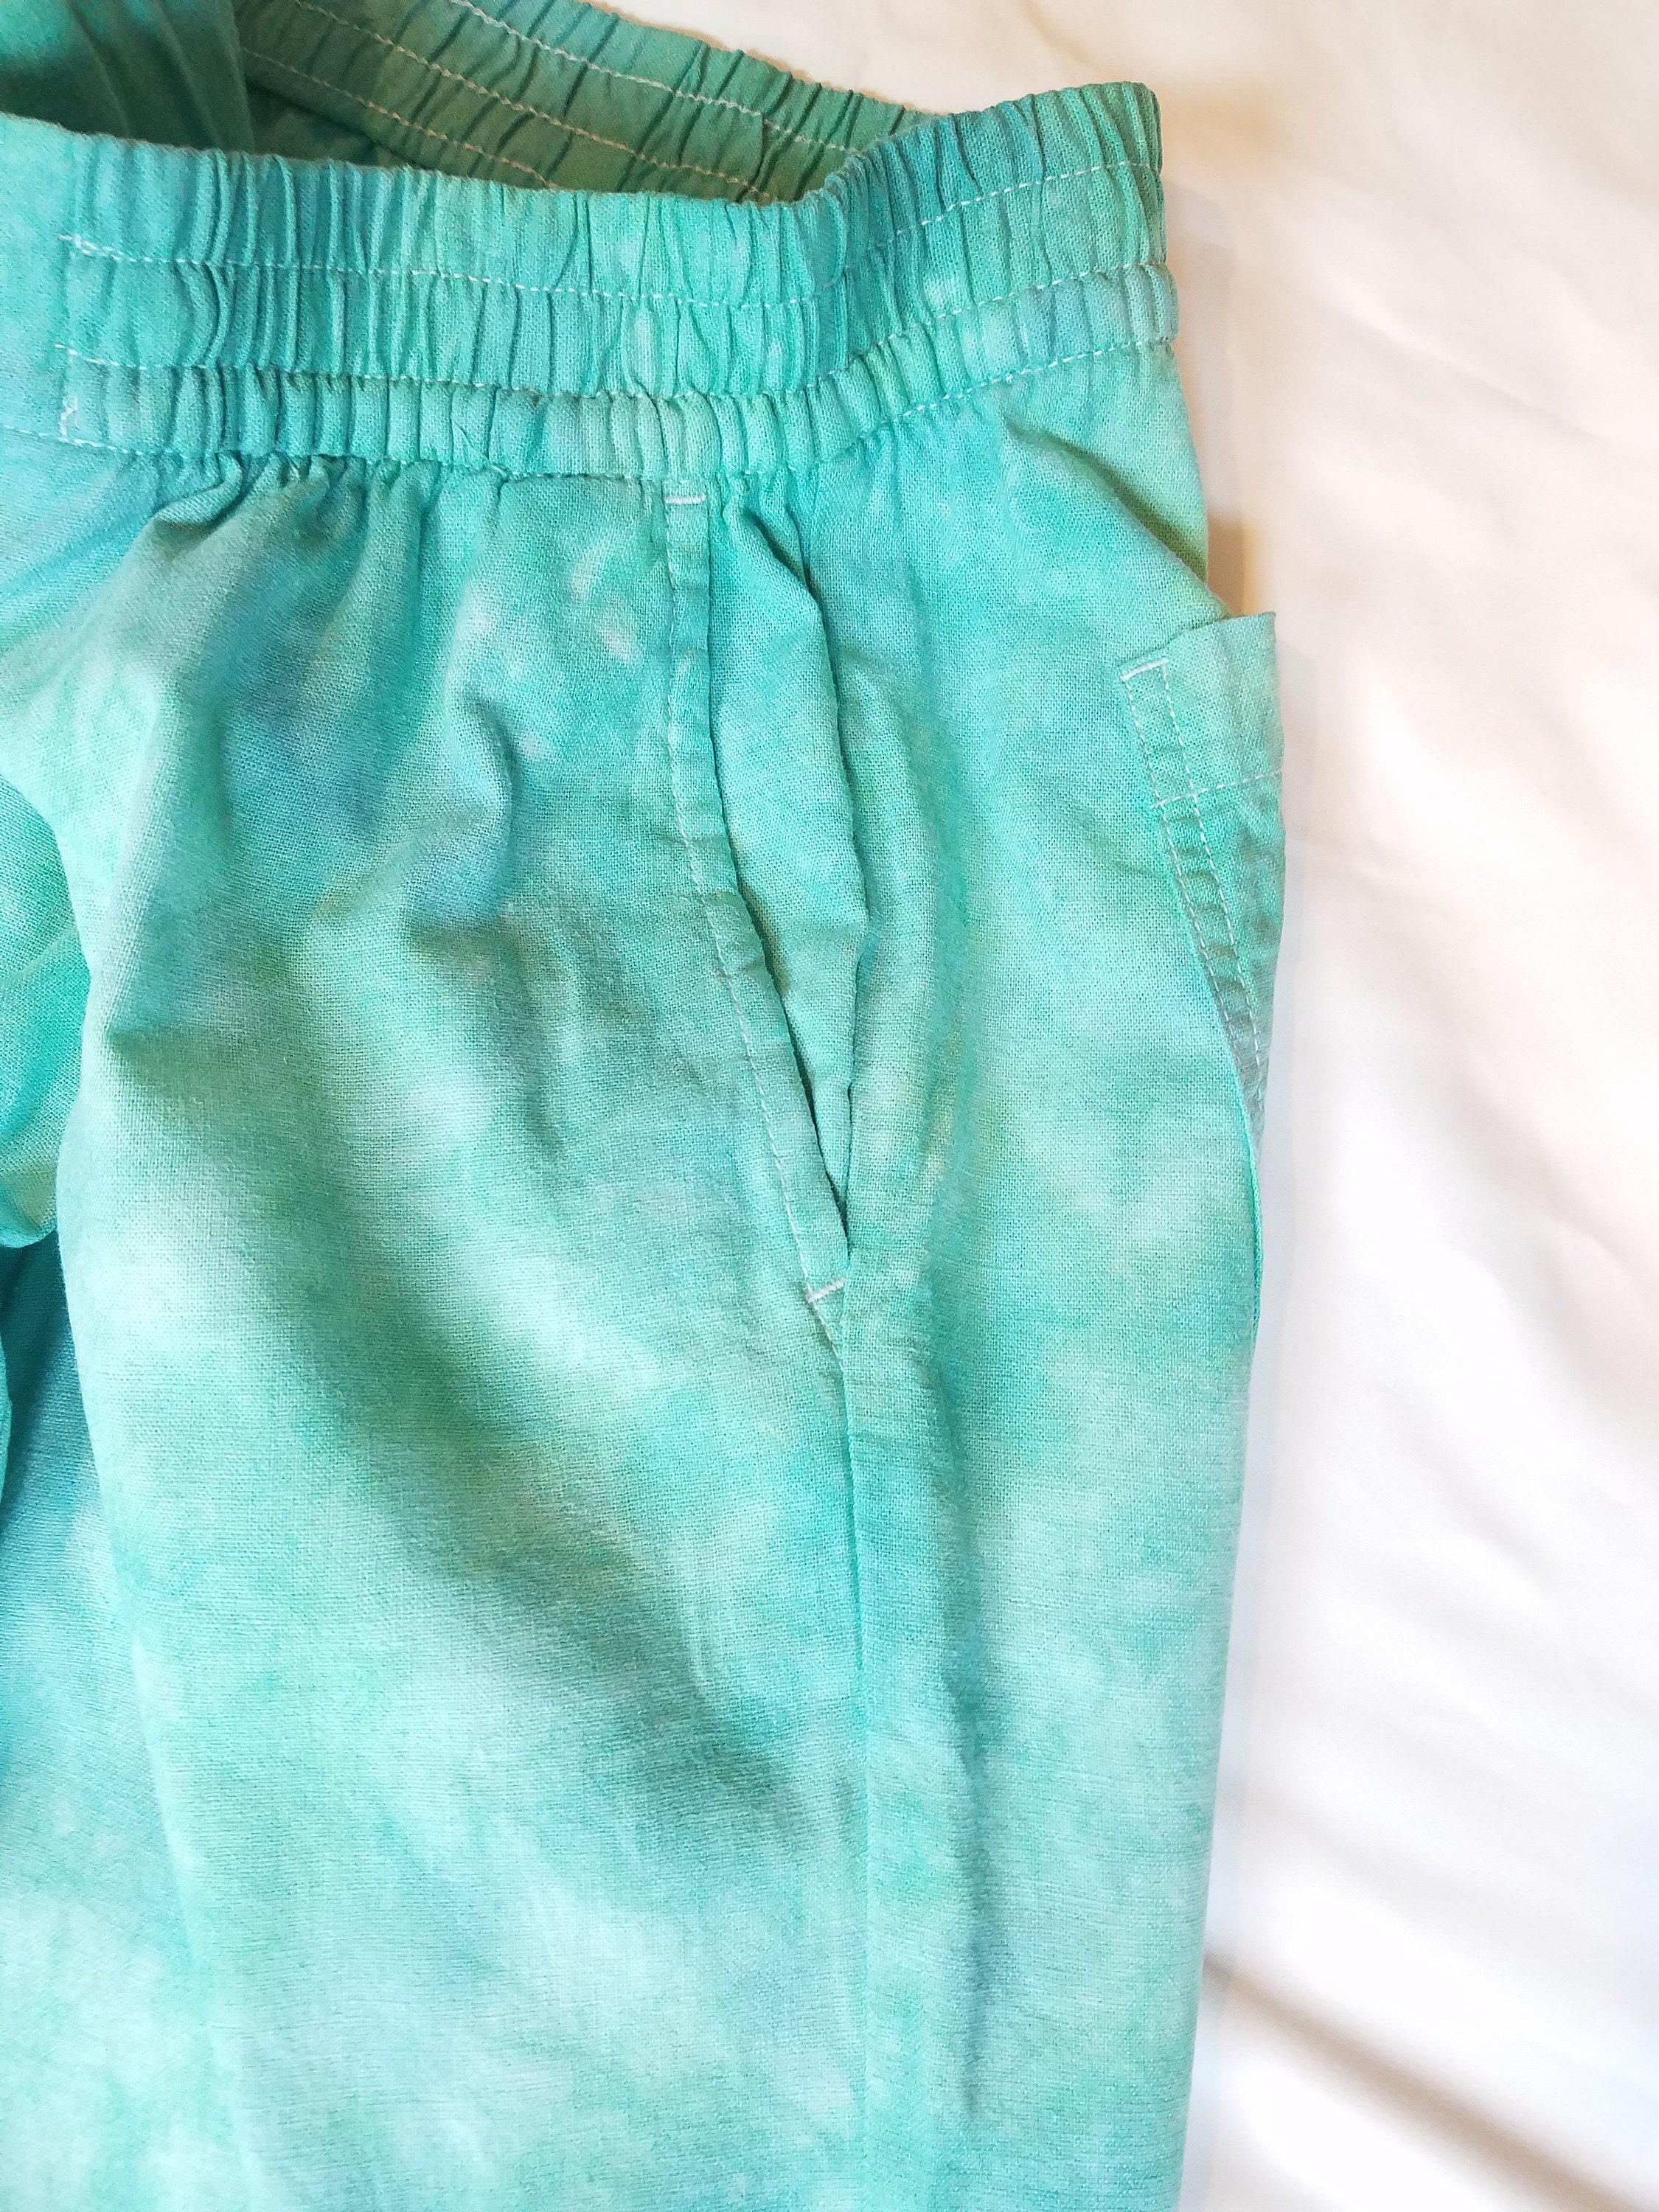 Size Medium - Tie Dye Pants - Linen Blend with POCKETS!